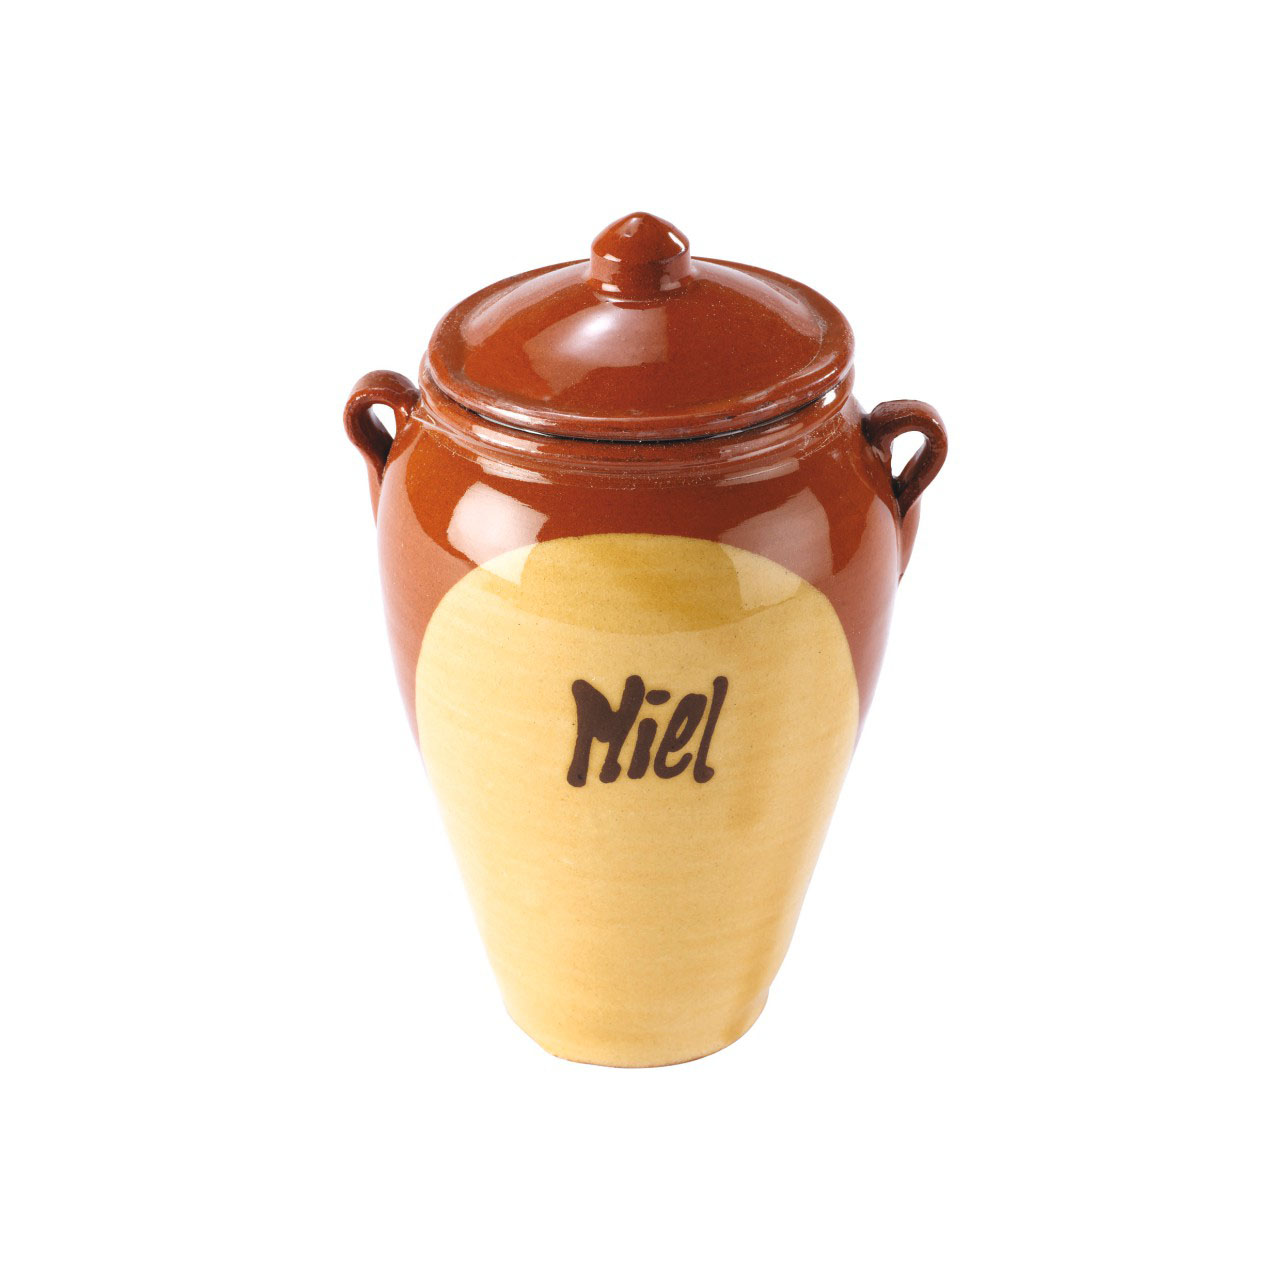 Spanish Wildflower Honey in Terracotta Jar